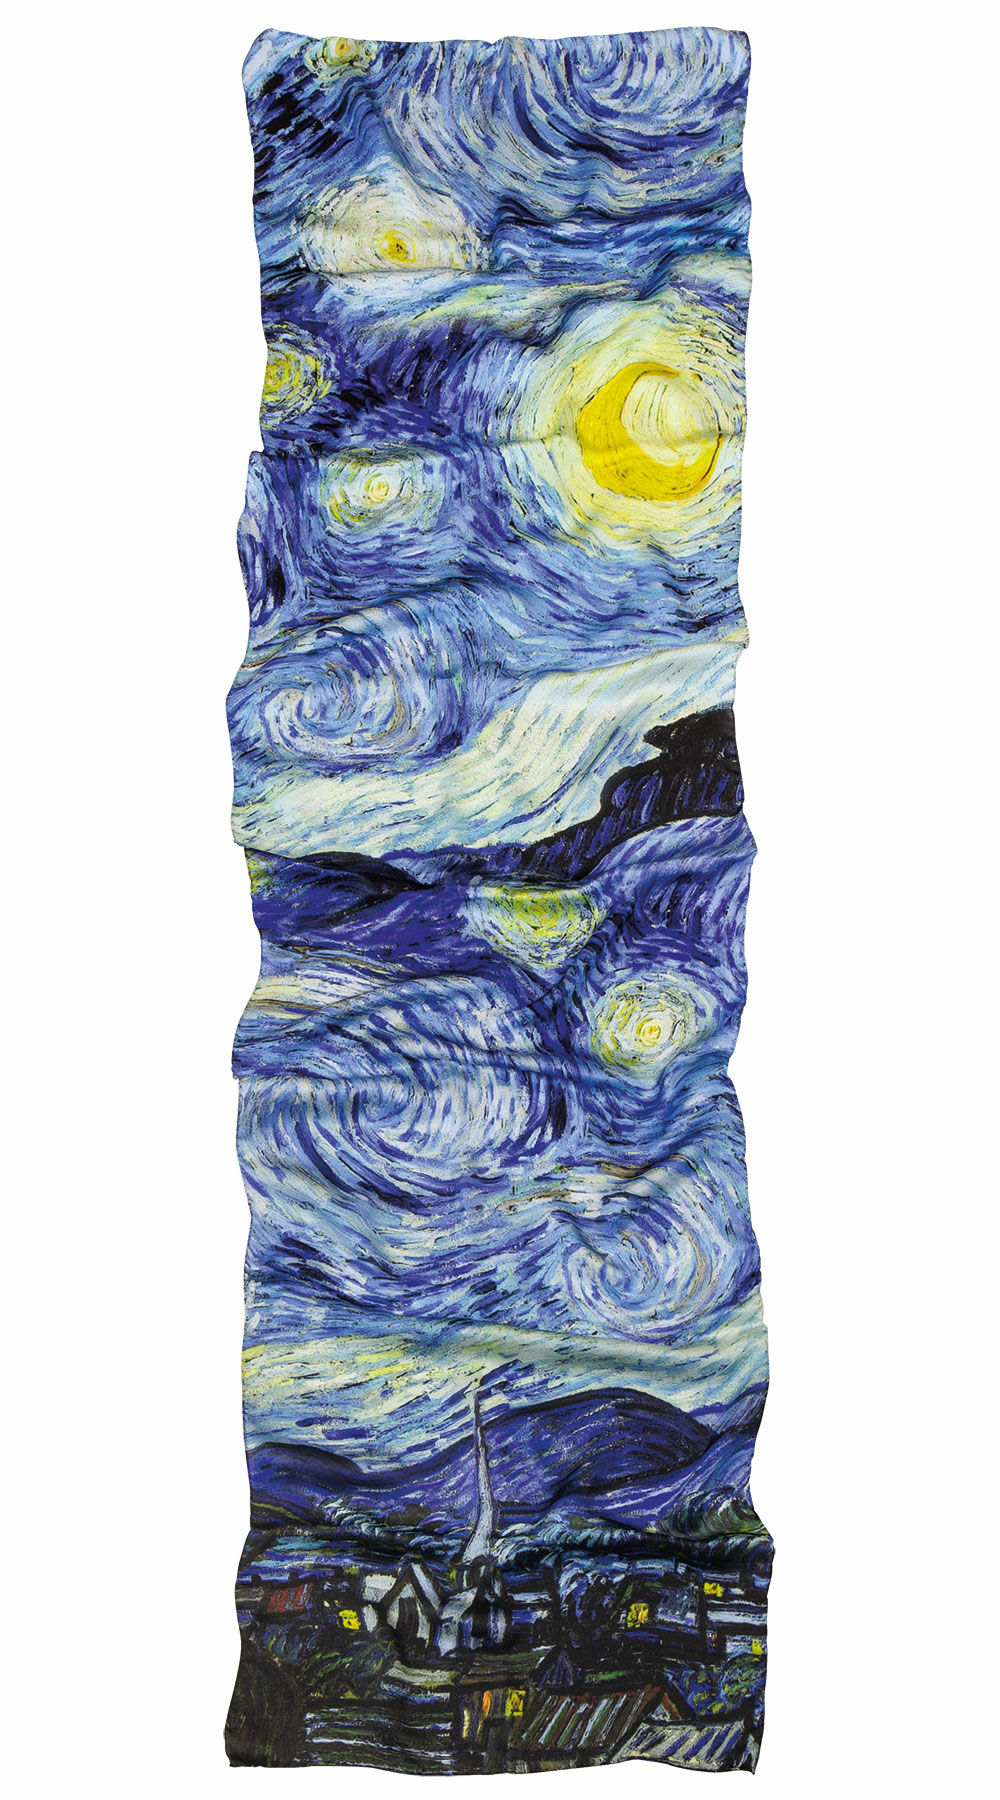 Silk scarf "Starry Night Over the Rhône" (1888) by Vincent van Gogh